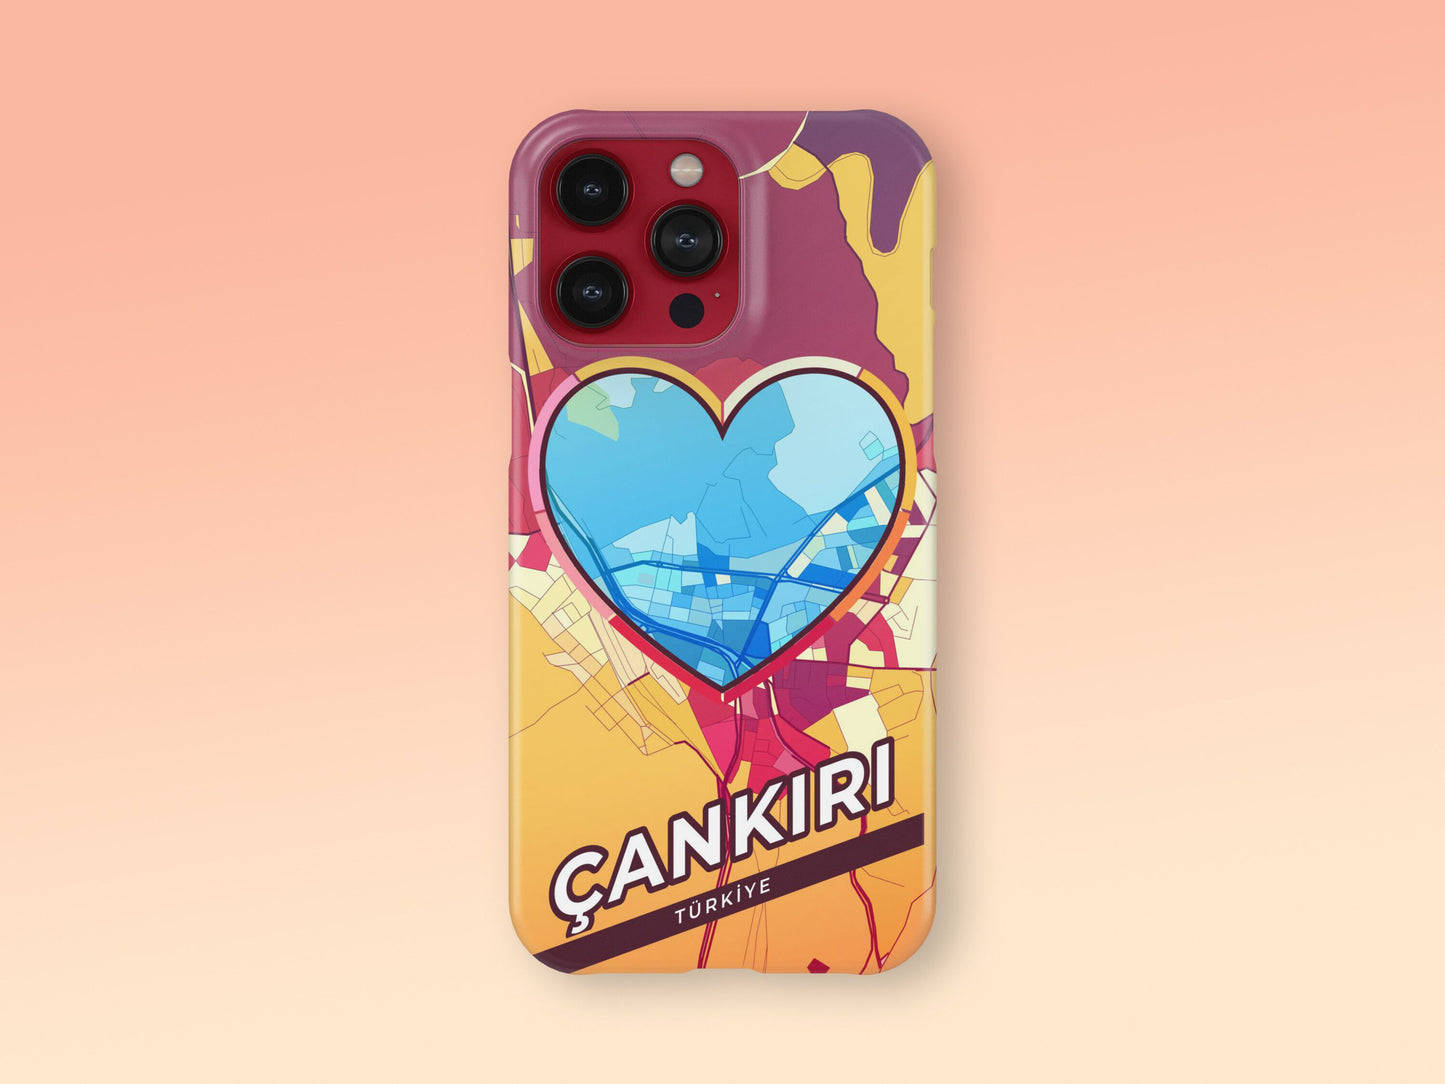 Çankırı Turkey slim phone case with colorful icon. Birthday, wedding or housewarming gift. Couple match cases. 2